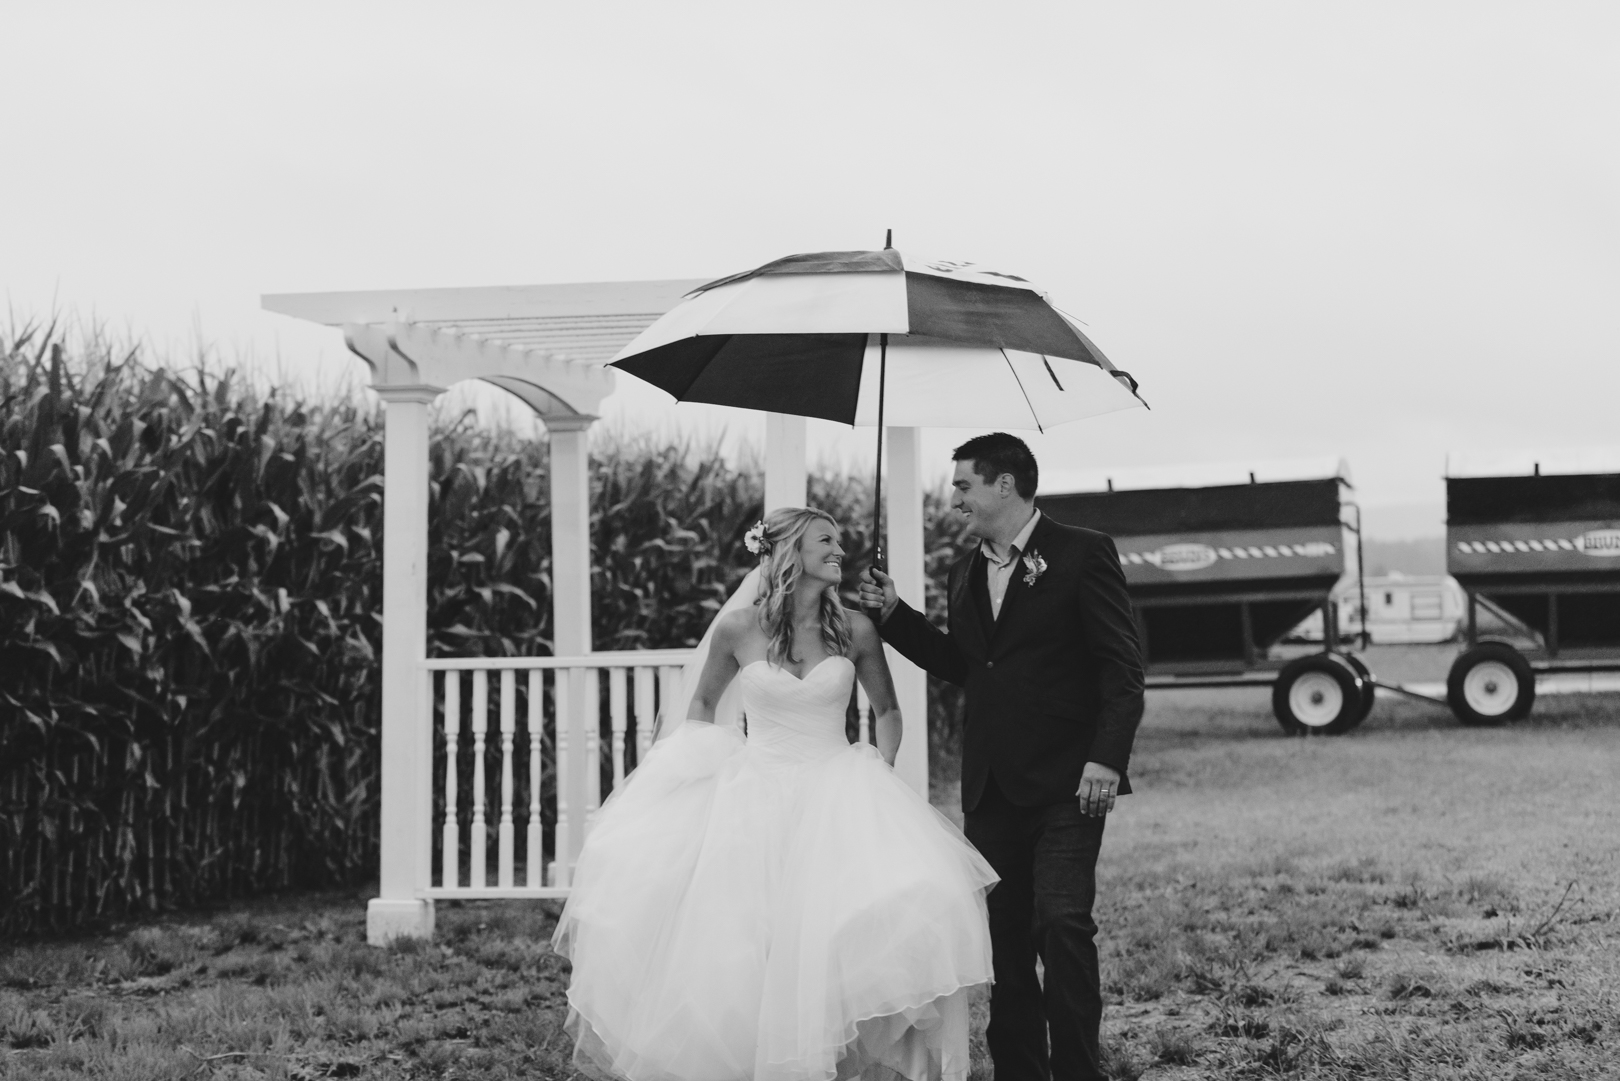 bride and groom walking underneath umbrella in front of corn fields